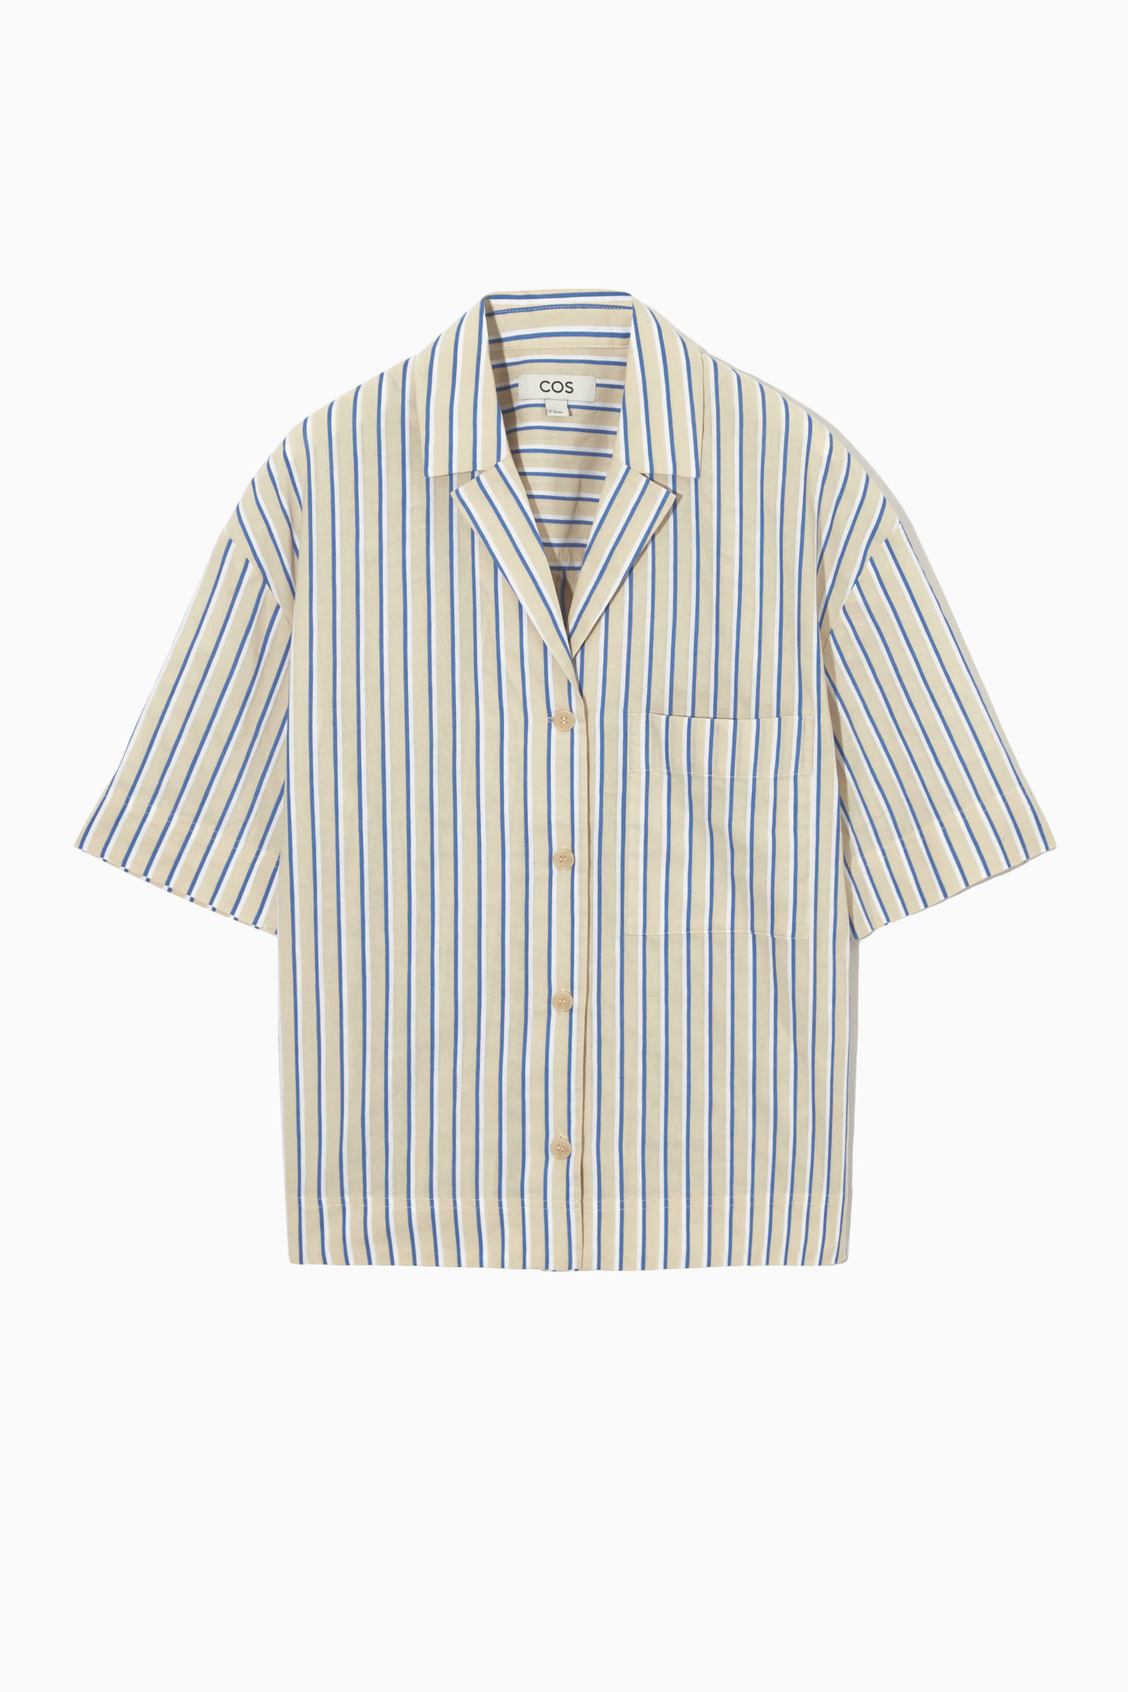 Buy Striped cotton shirt online in KSA